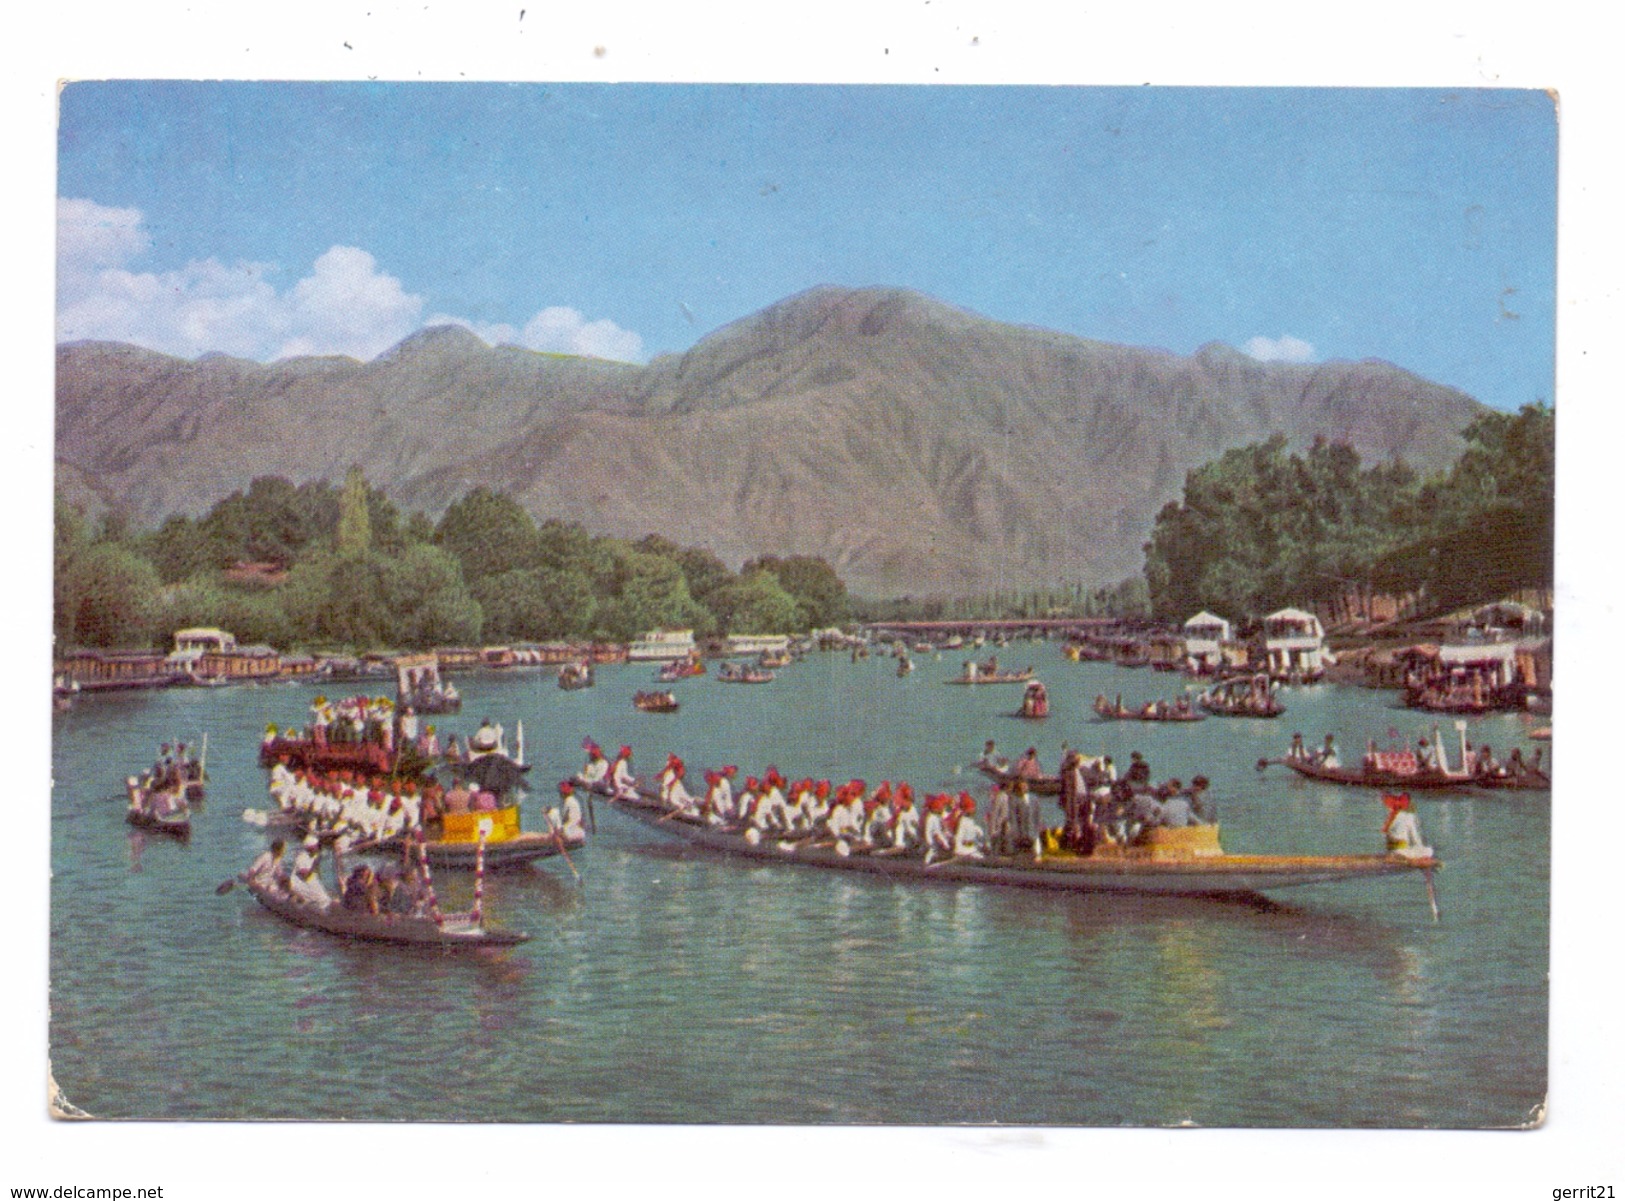 SPORT - RUDERN / Rowing - Regatta, Srinagar, Kashmir / India - Rudersport